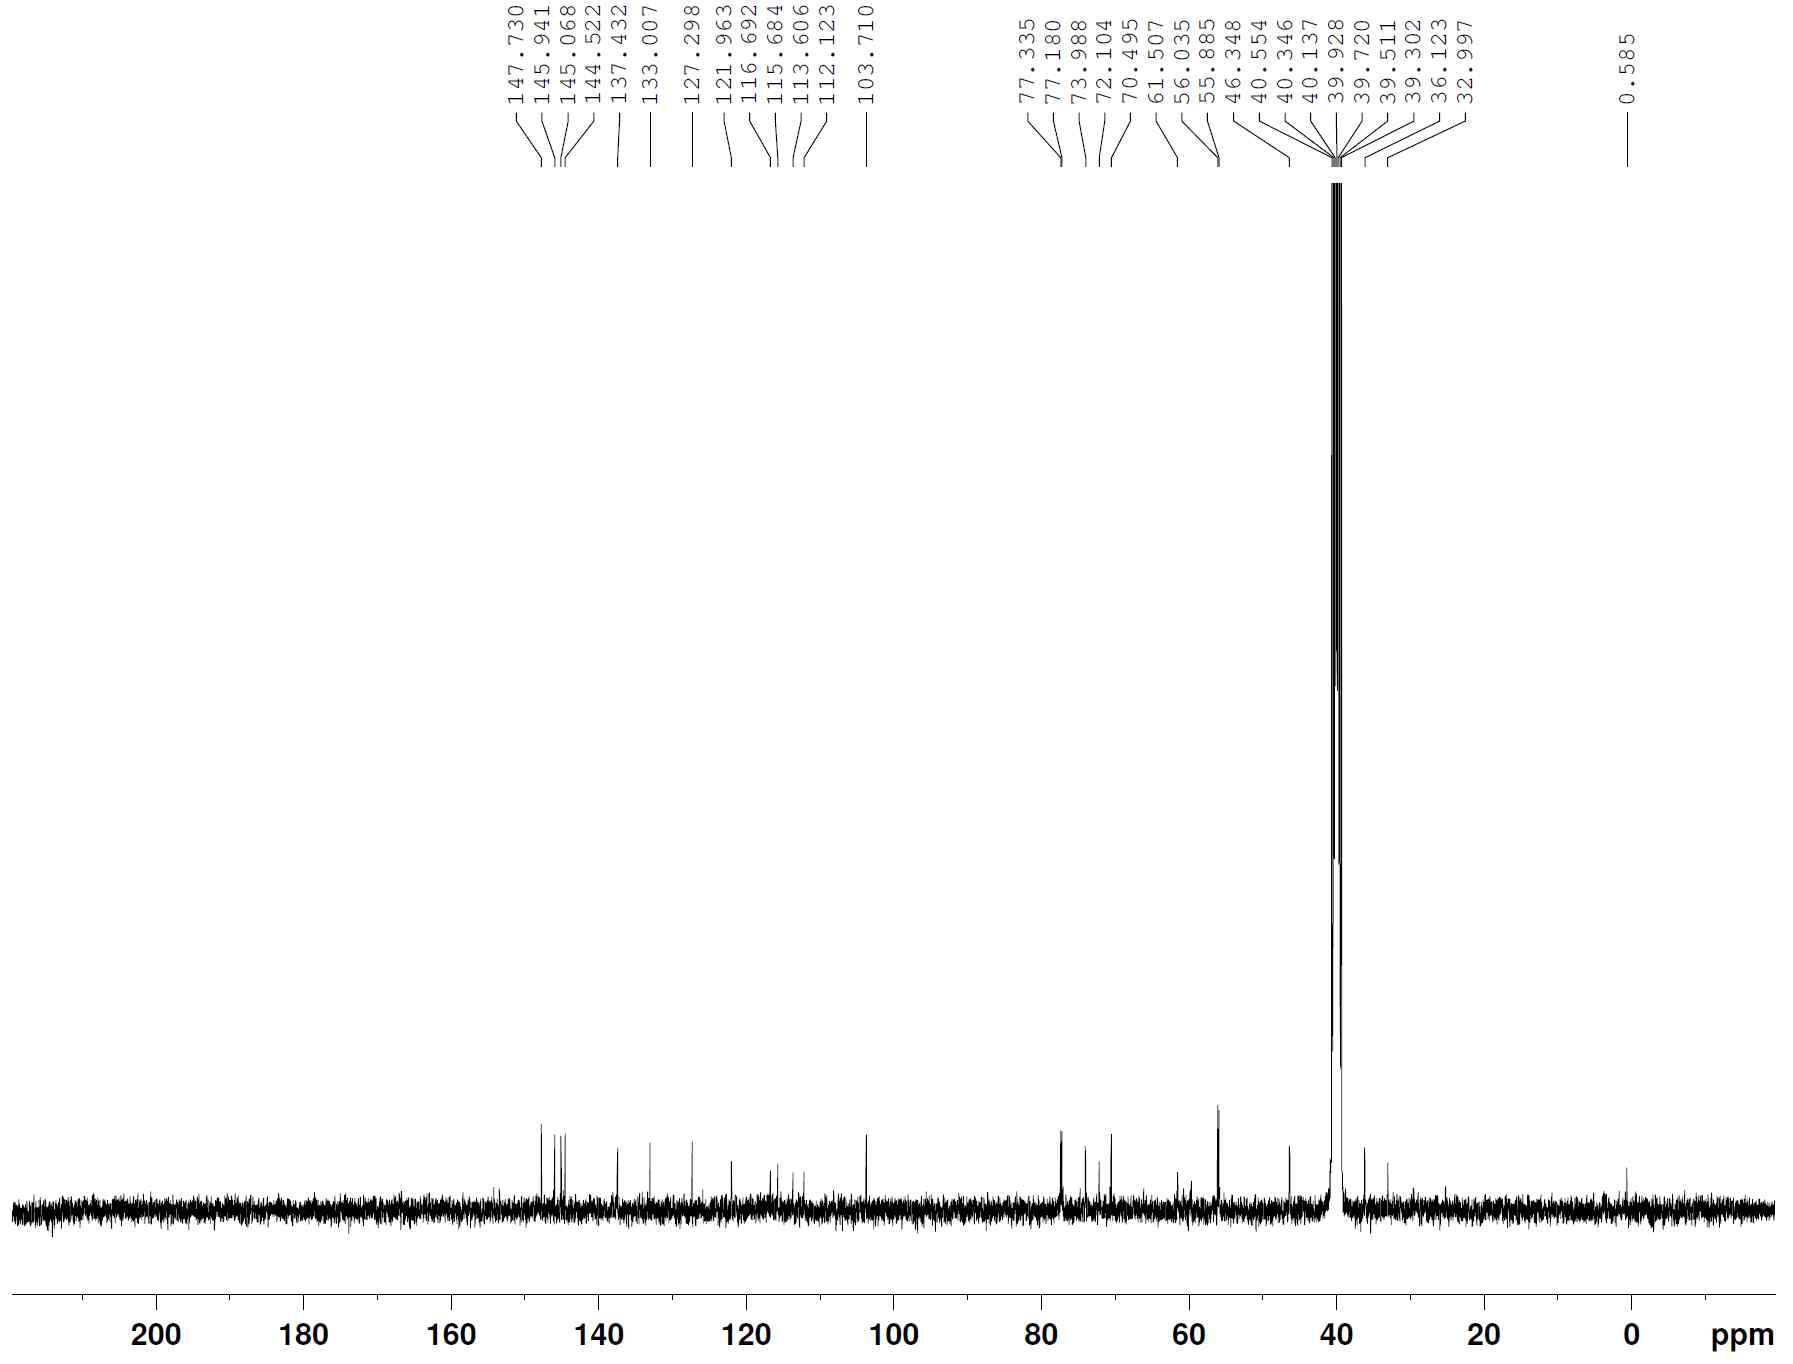 13C-NMR spectrum of compound 7